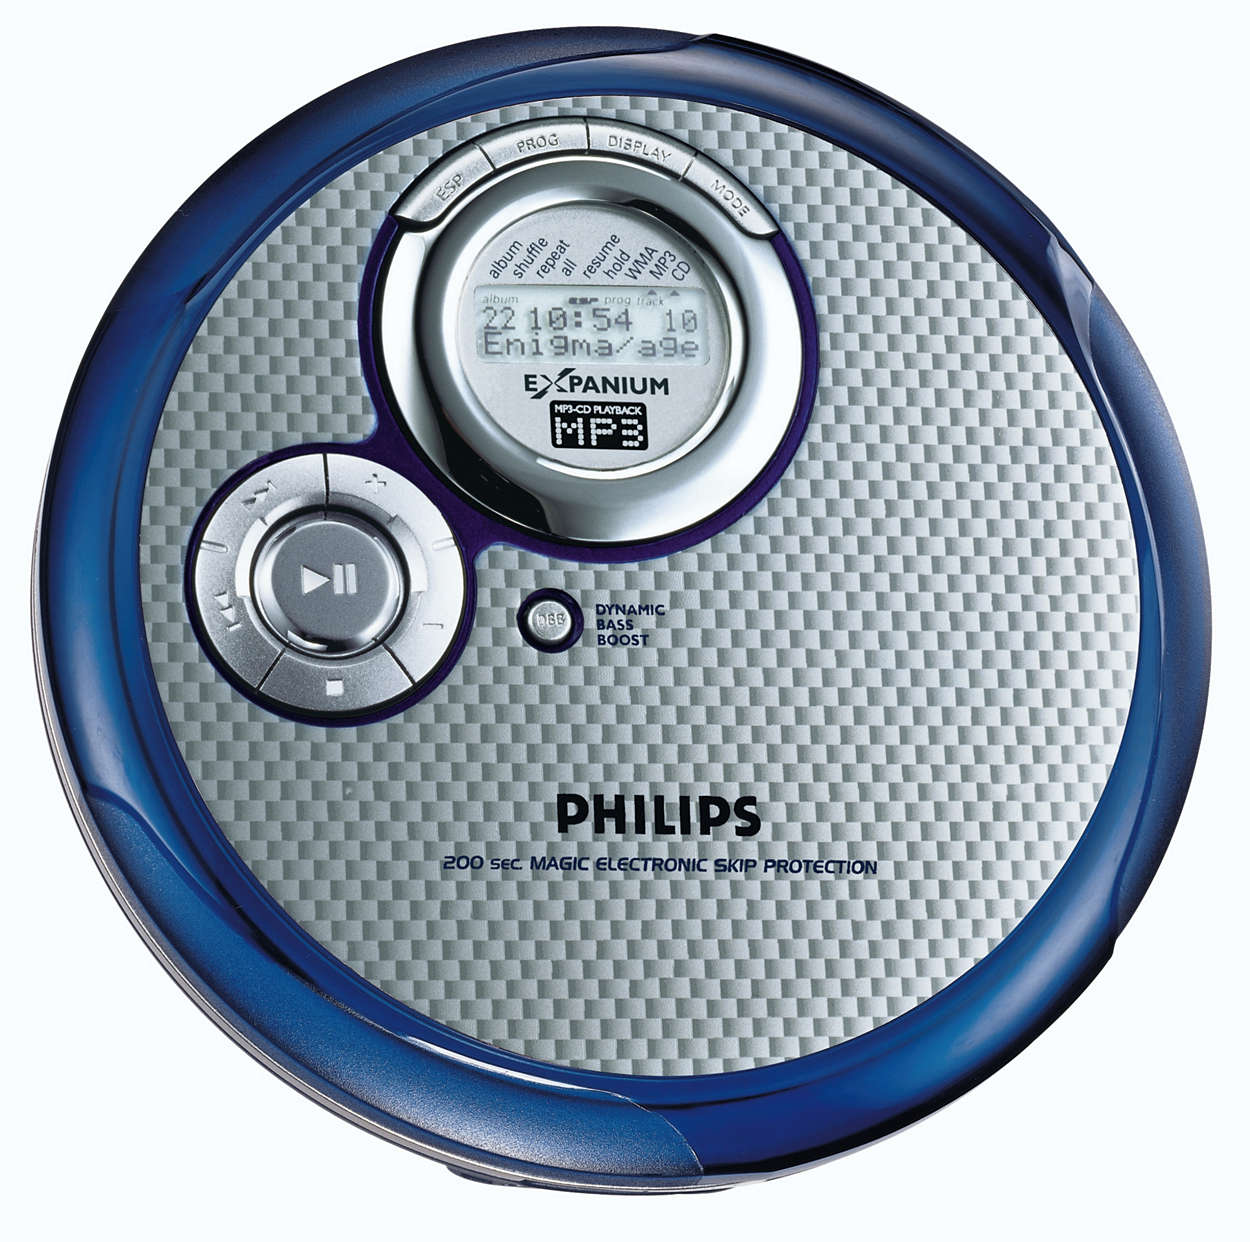 Rmx 3363. Портативный CD плеер Philips Exp. CD плеер Philips exp2368. Портативный mp3-CD плеер Philips exp2368. CD mp3 плеер Philips Expanium.